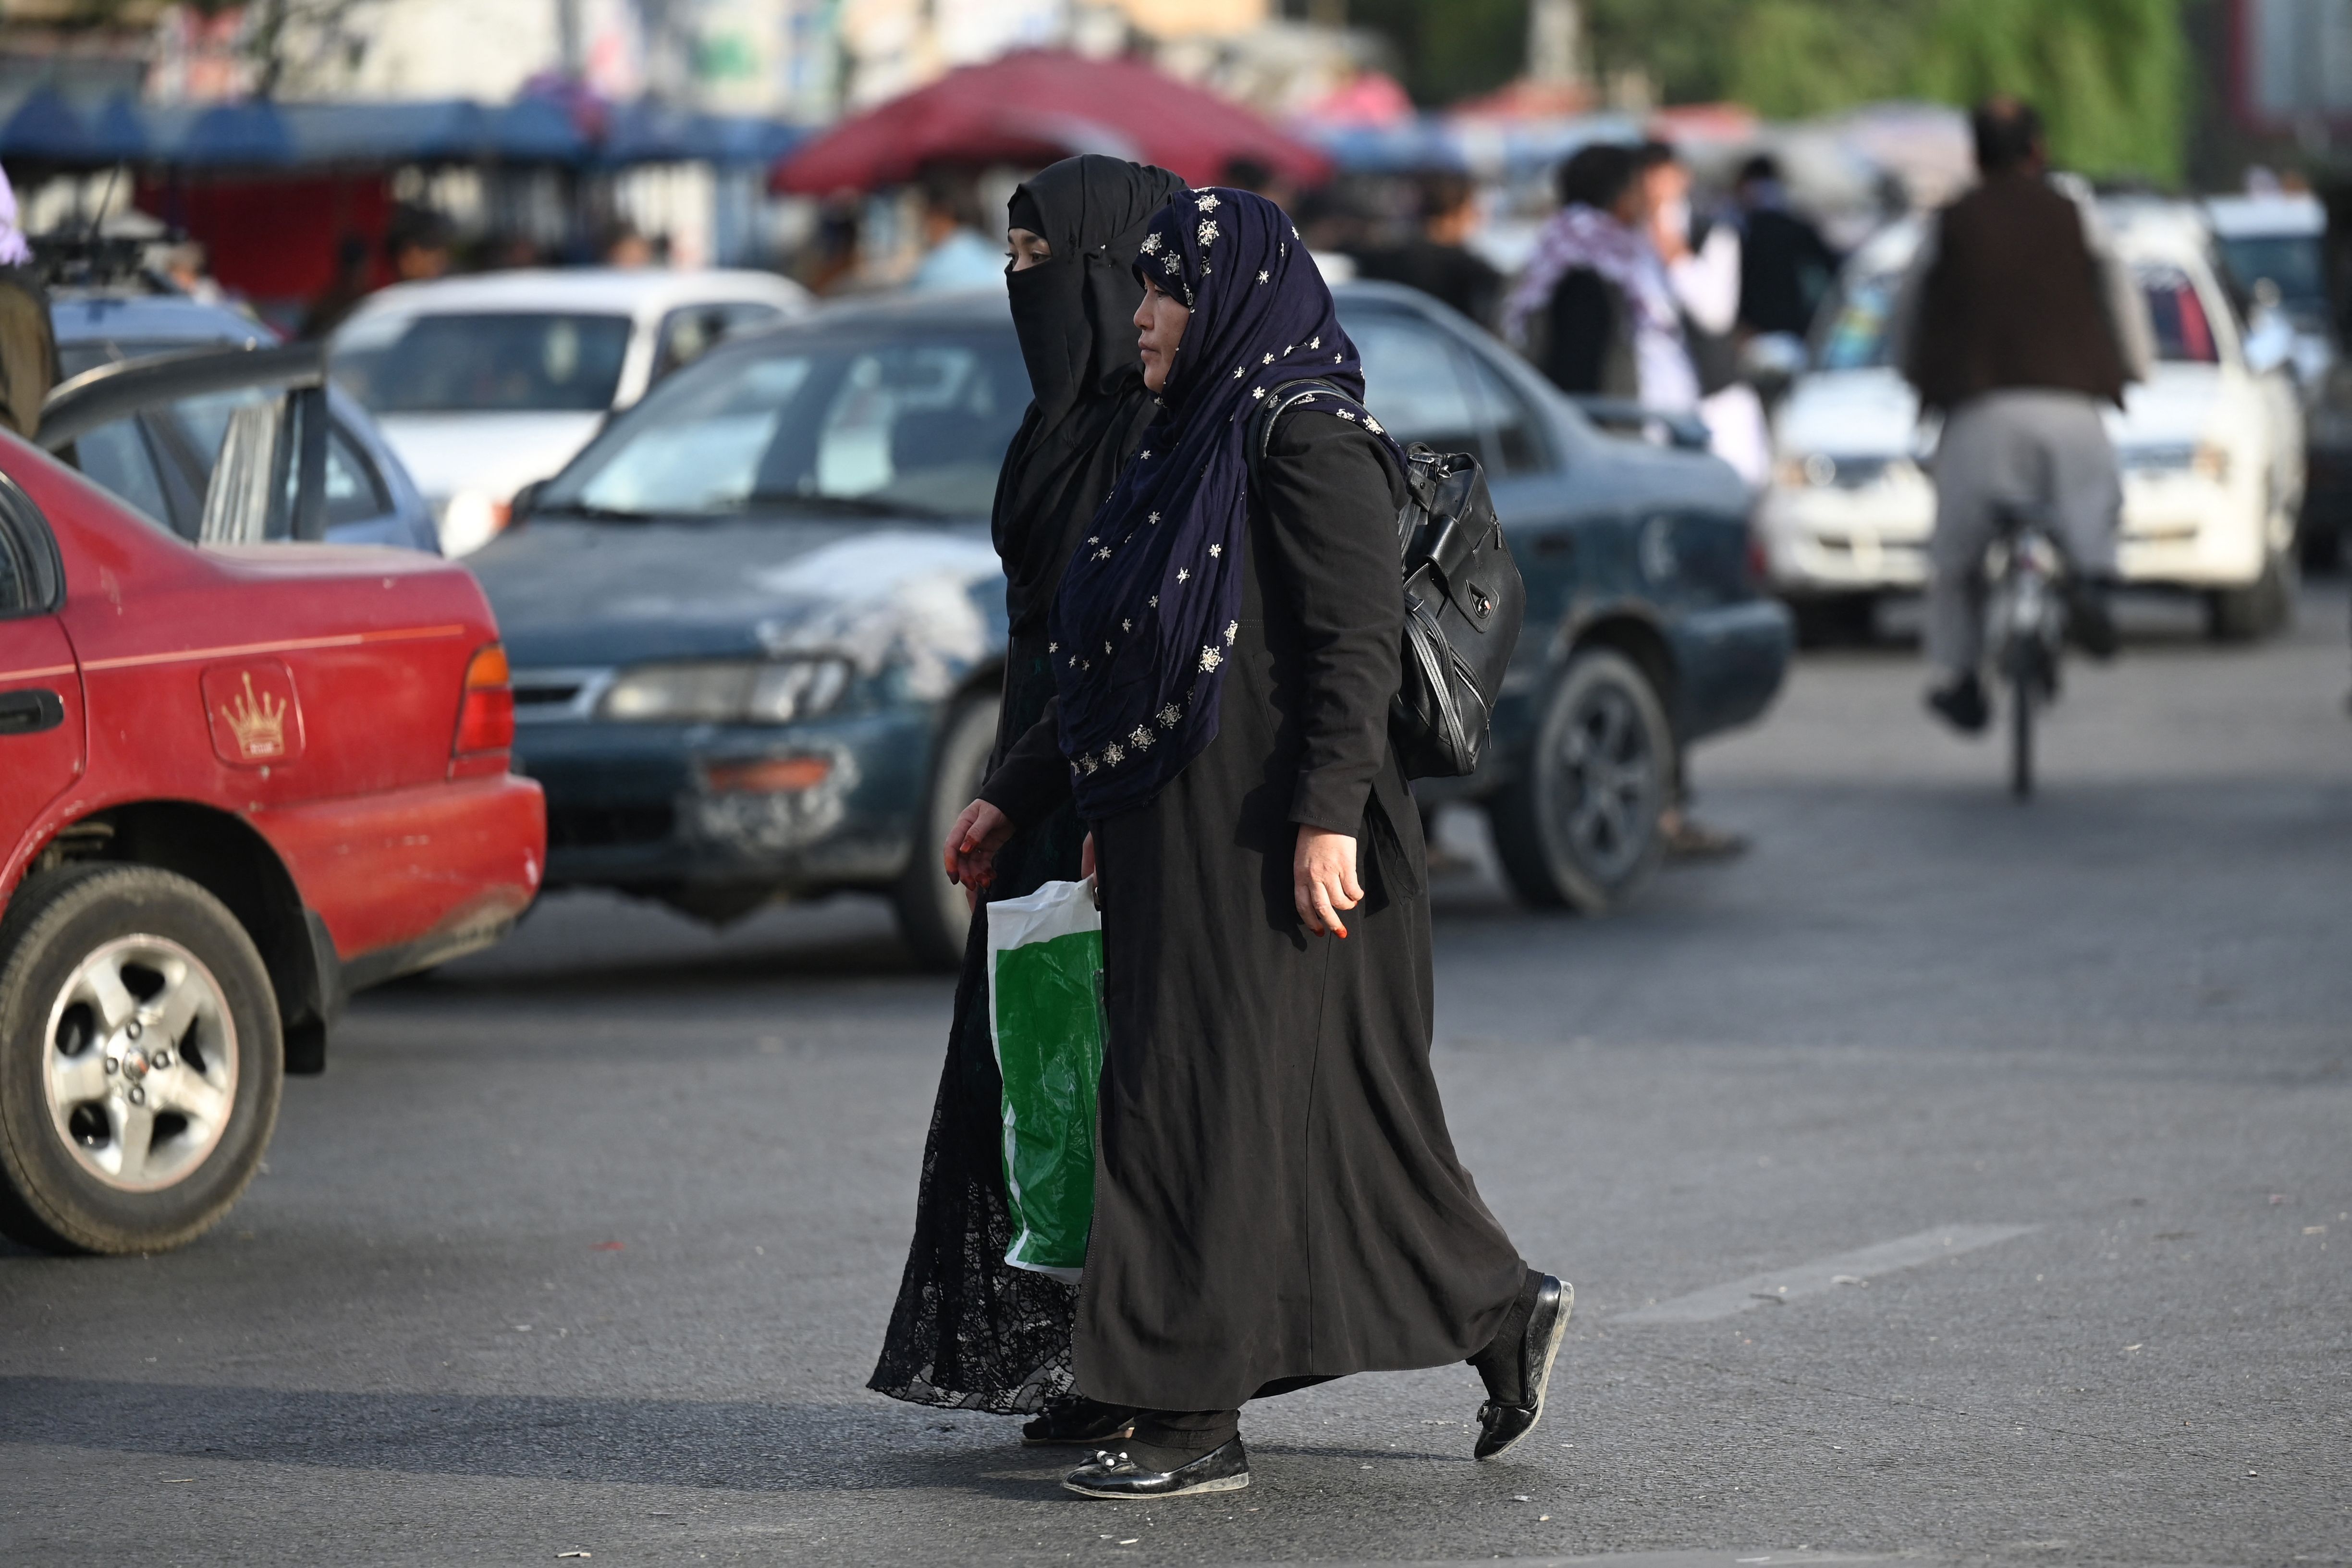  Burqa clad Afghan women cross a street in Kabul on August 31